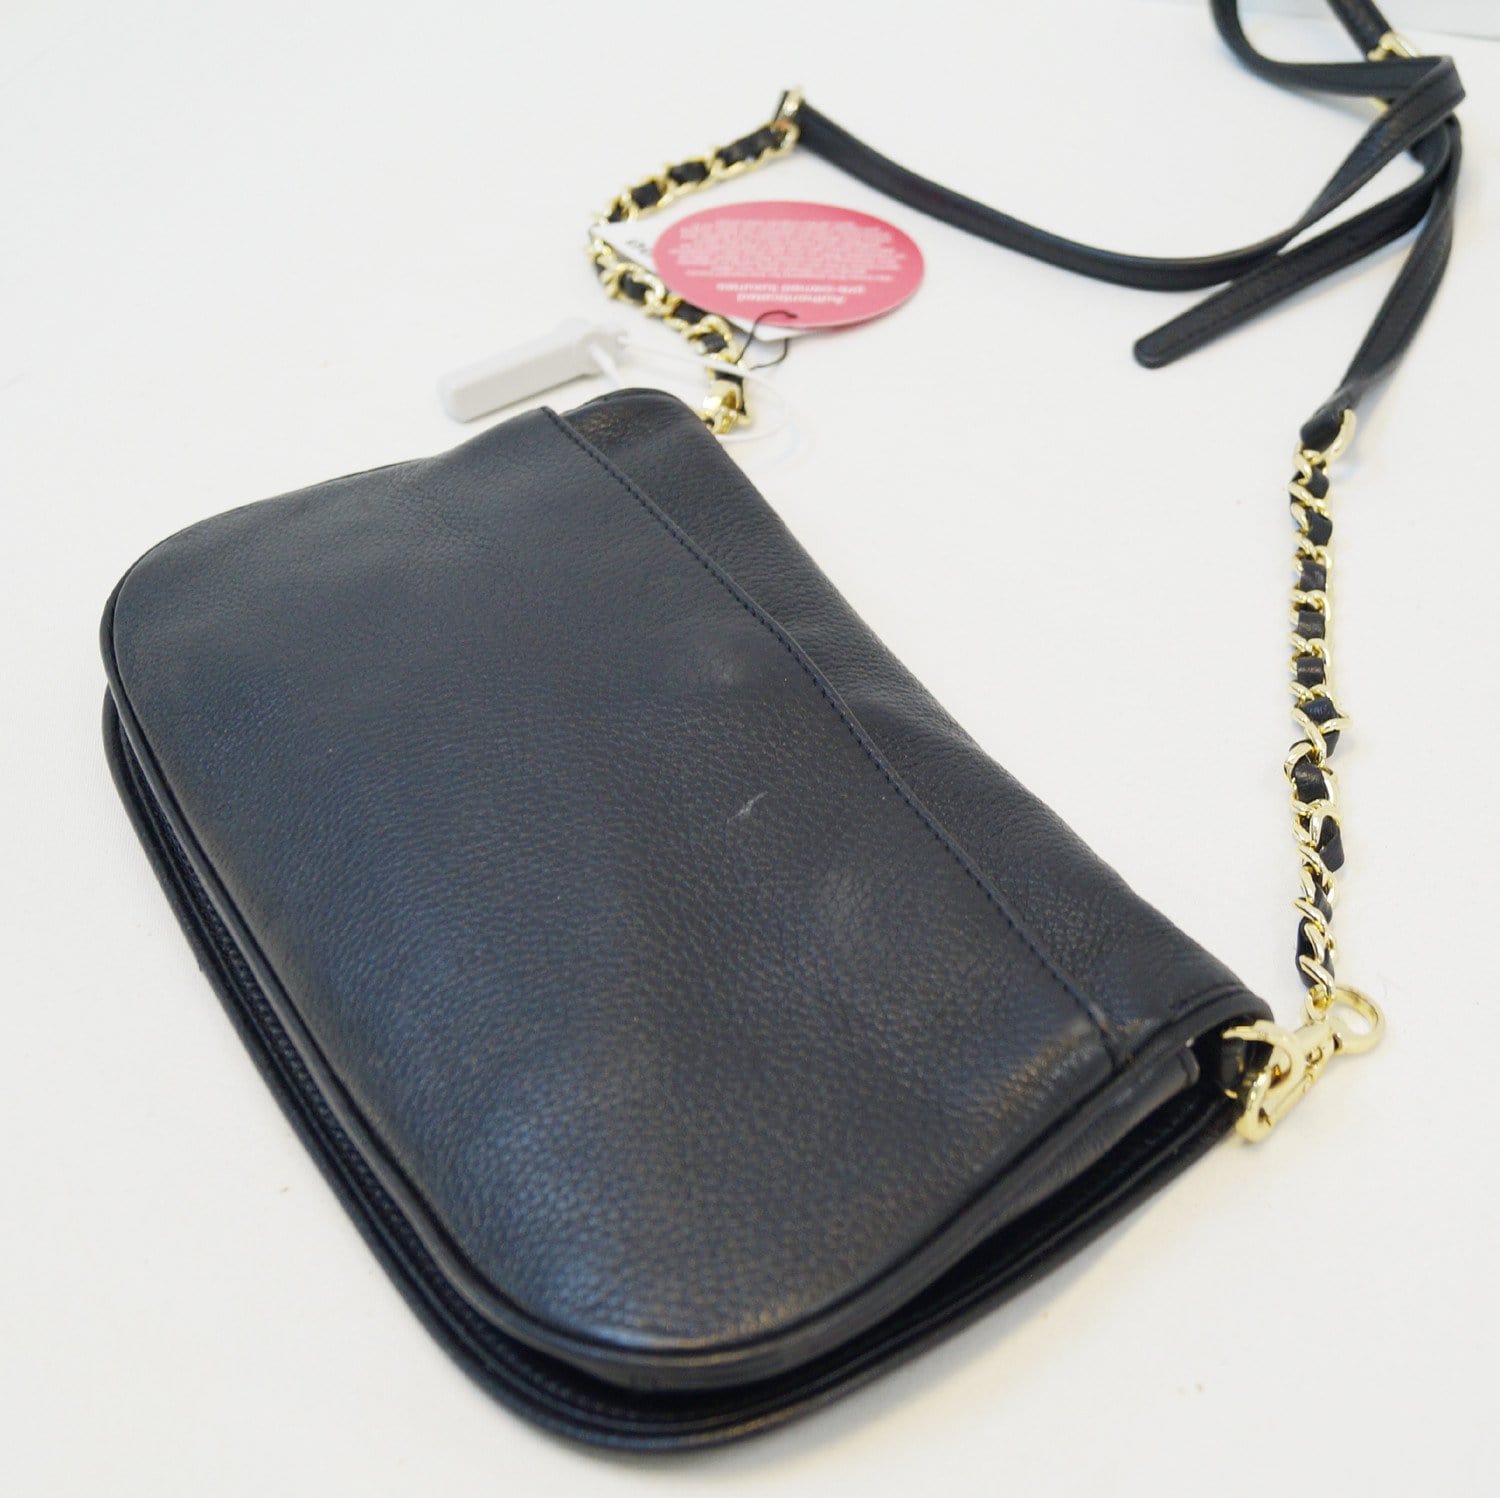 Tory Burch 138772 Britten Convertible Crossbody Bag in Black: Handbags